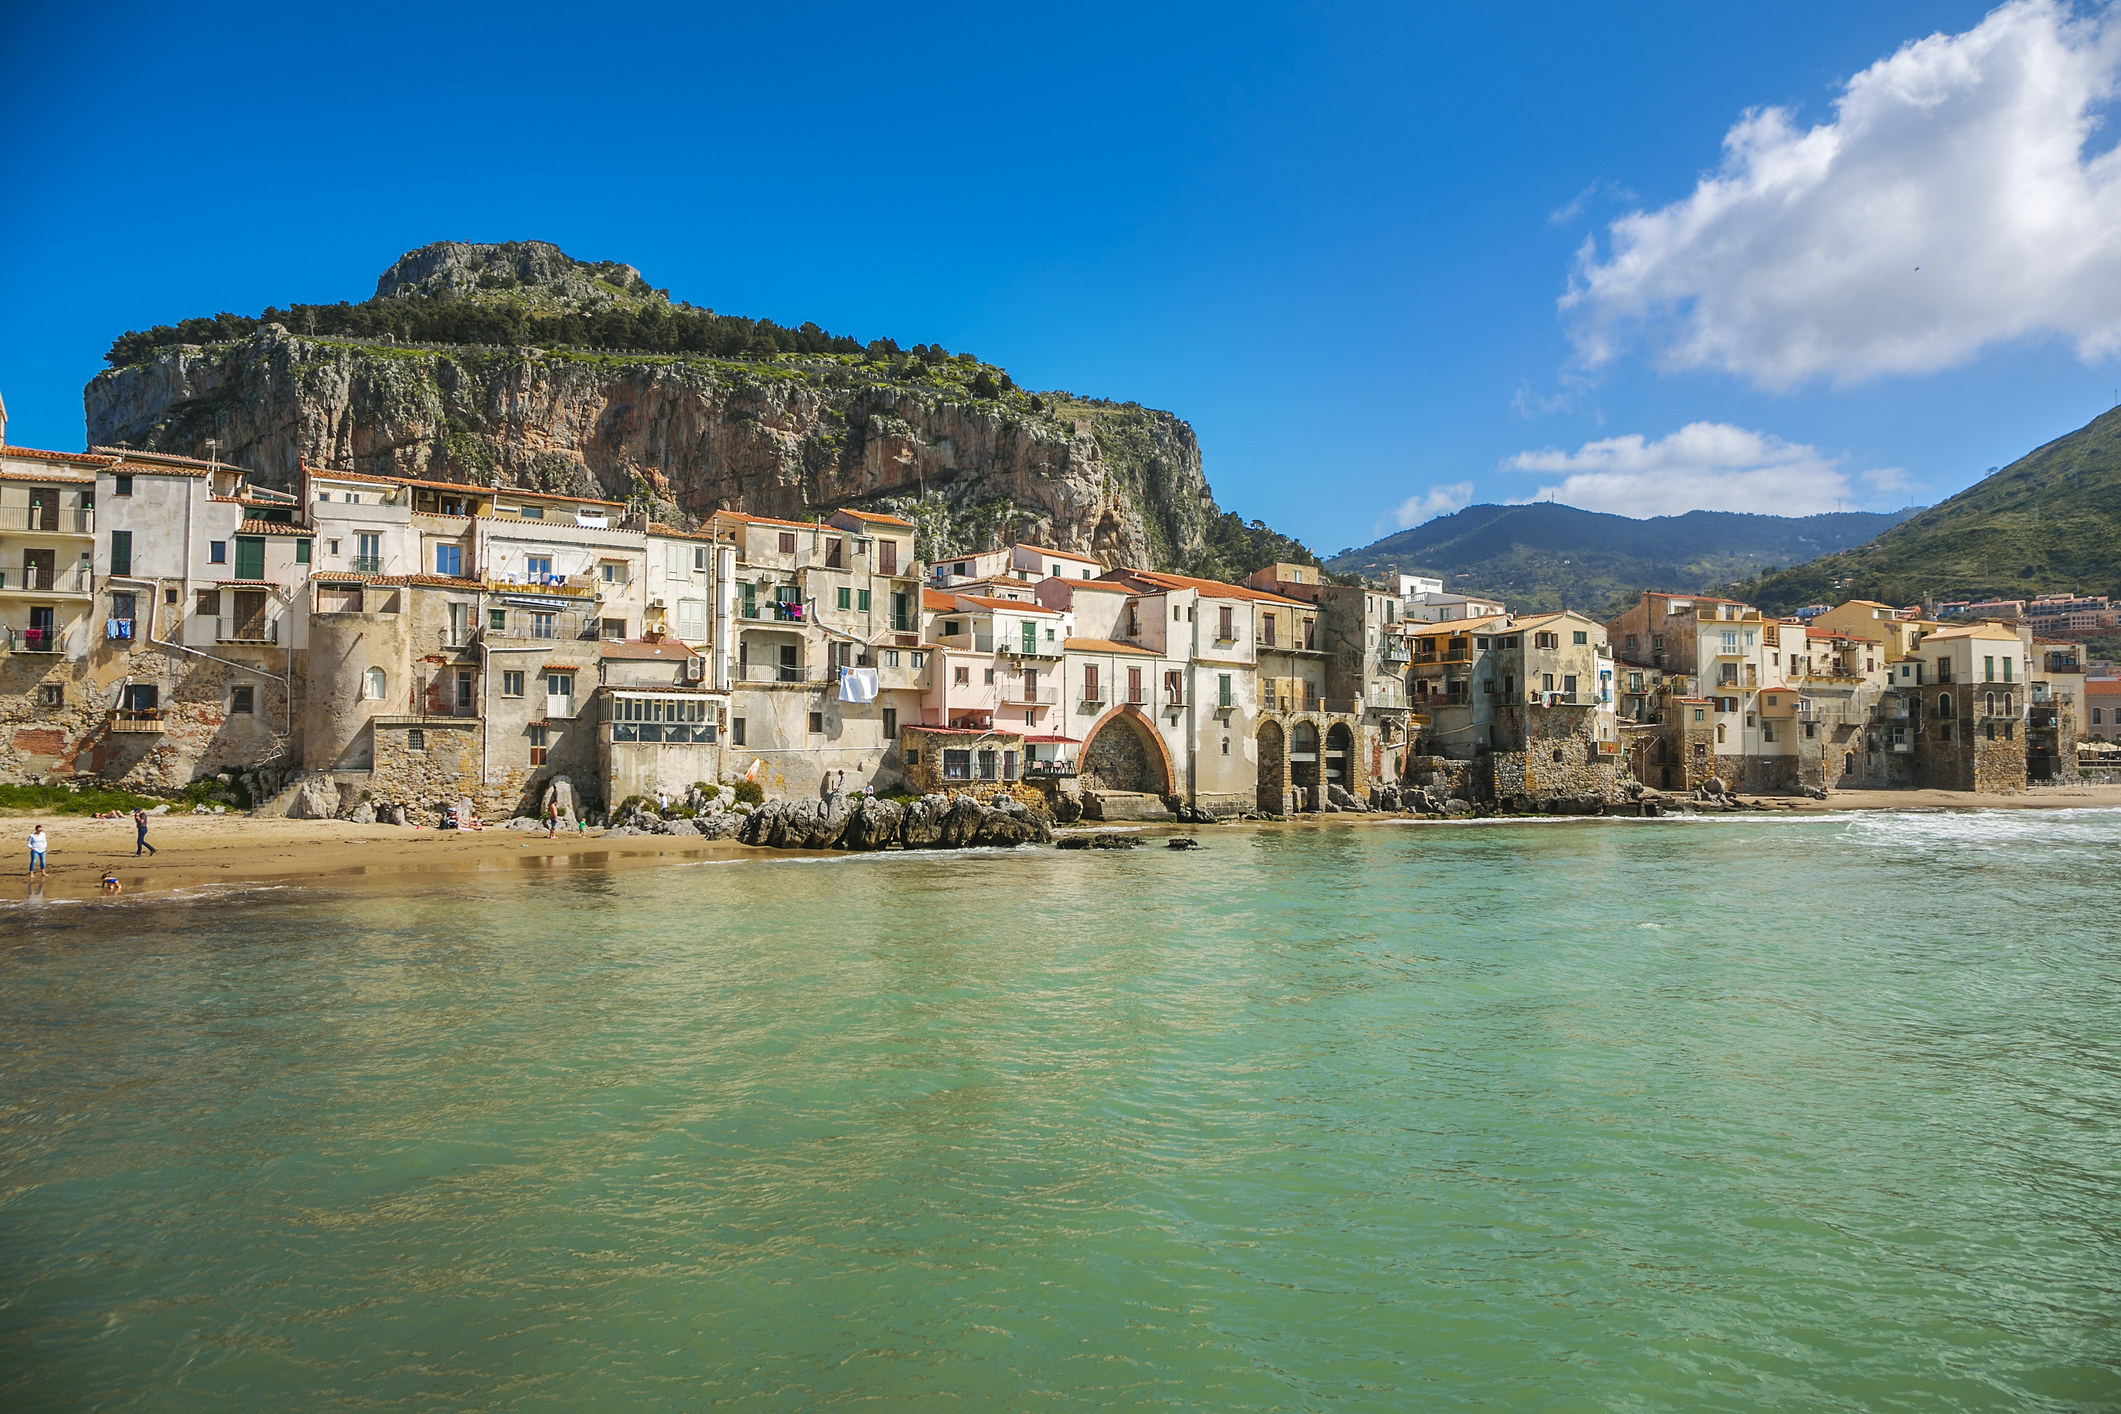 A coastal town in Sicily